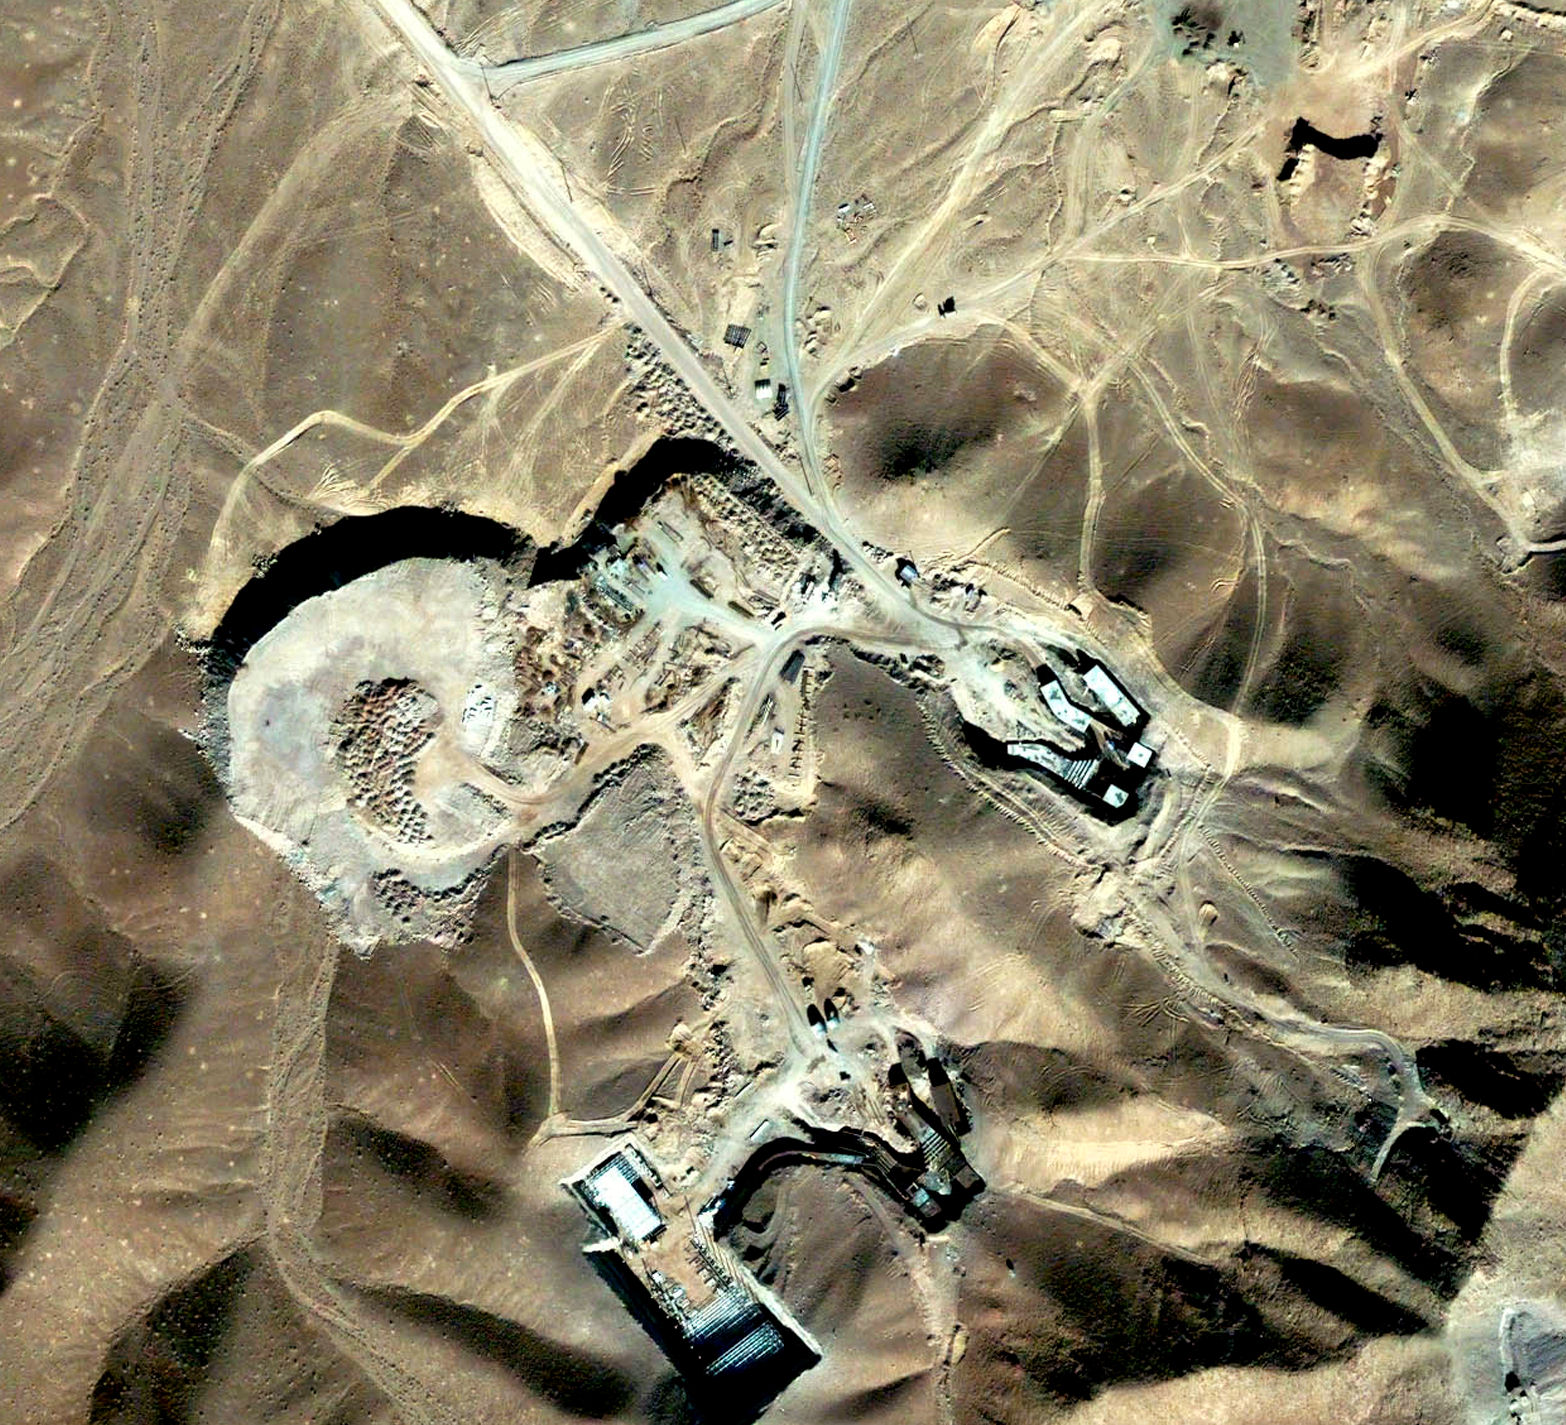 Nuclear facility at Qom, Iran (credit - Reuters)